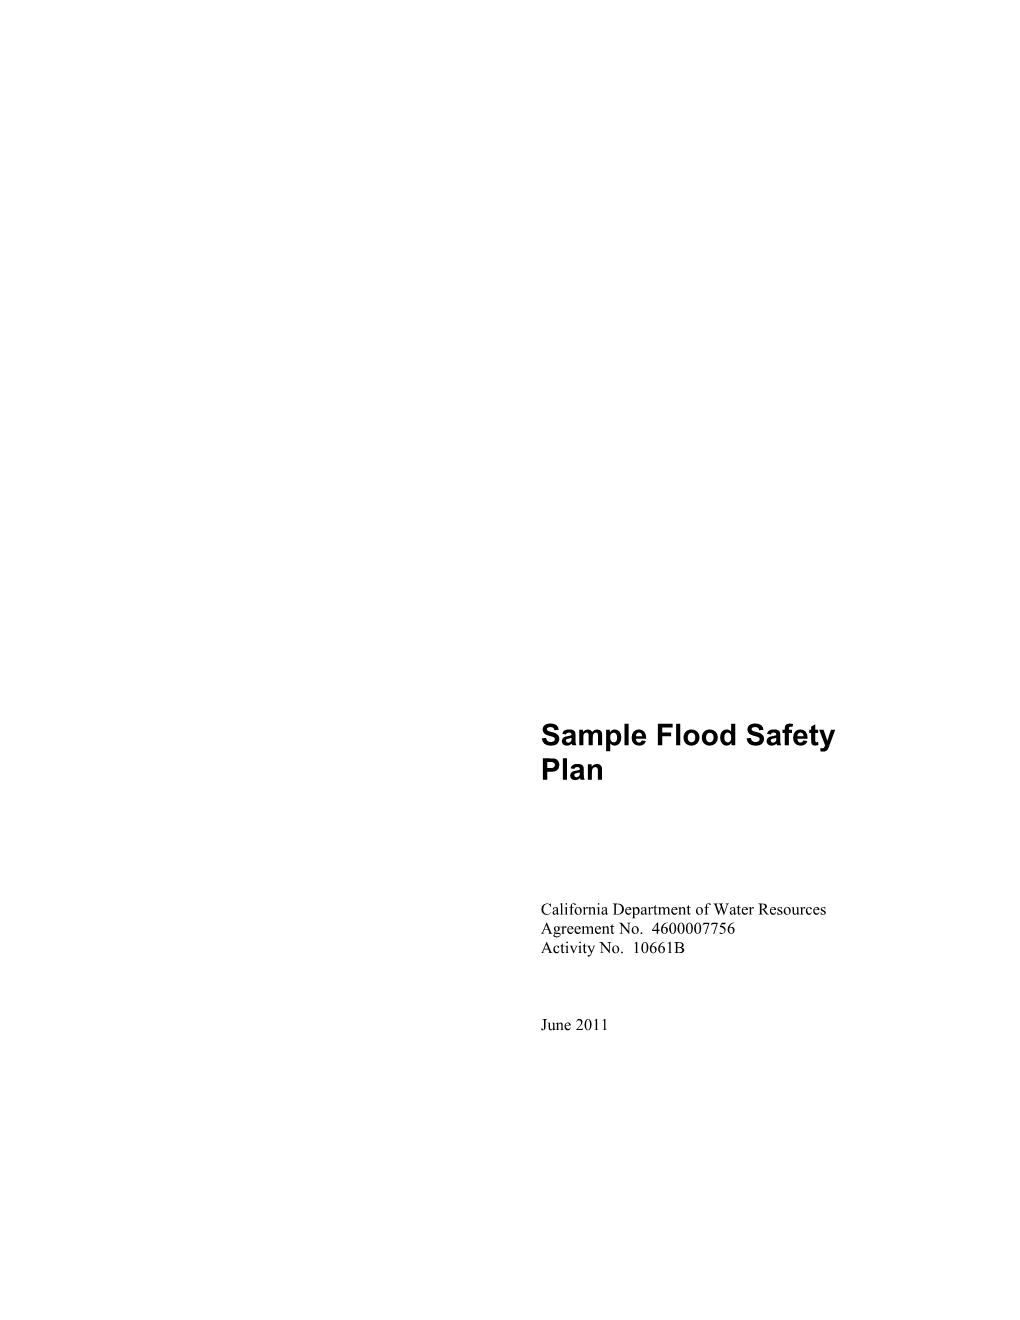 Sample Flood Safety Plan